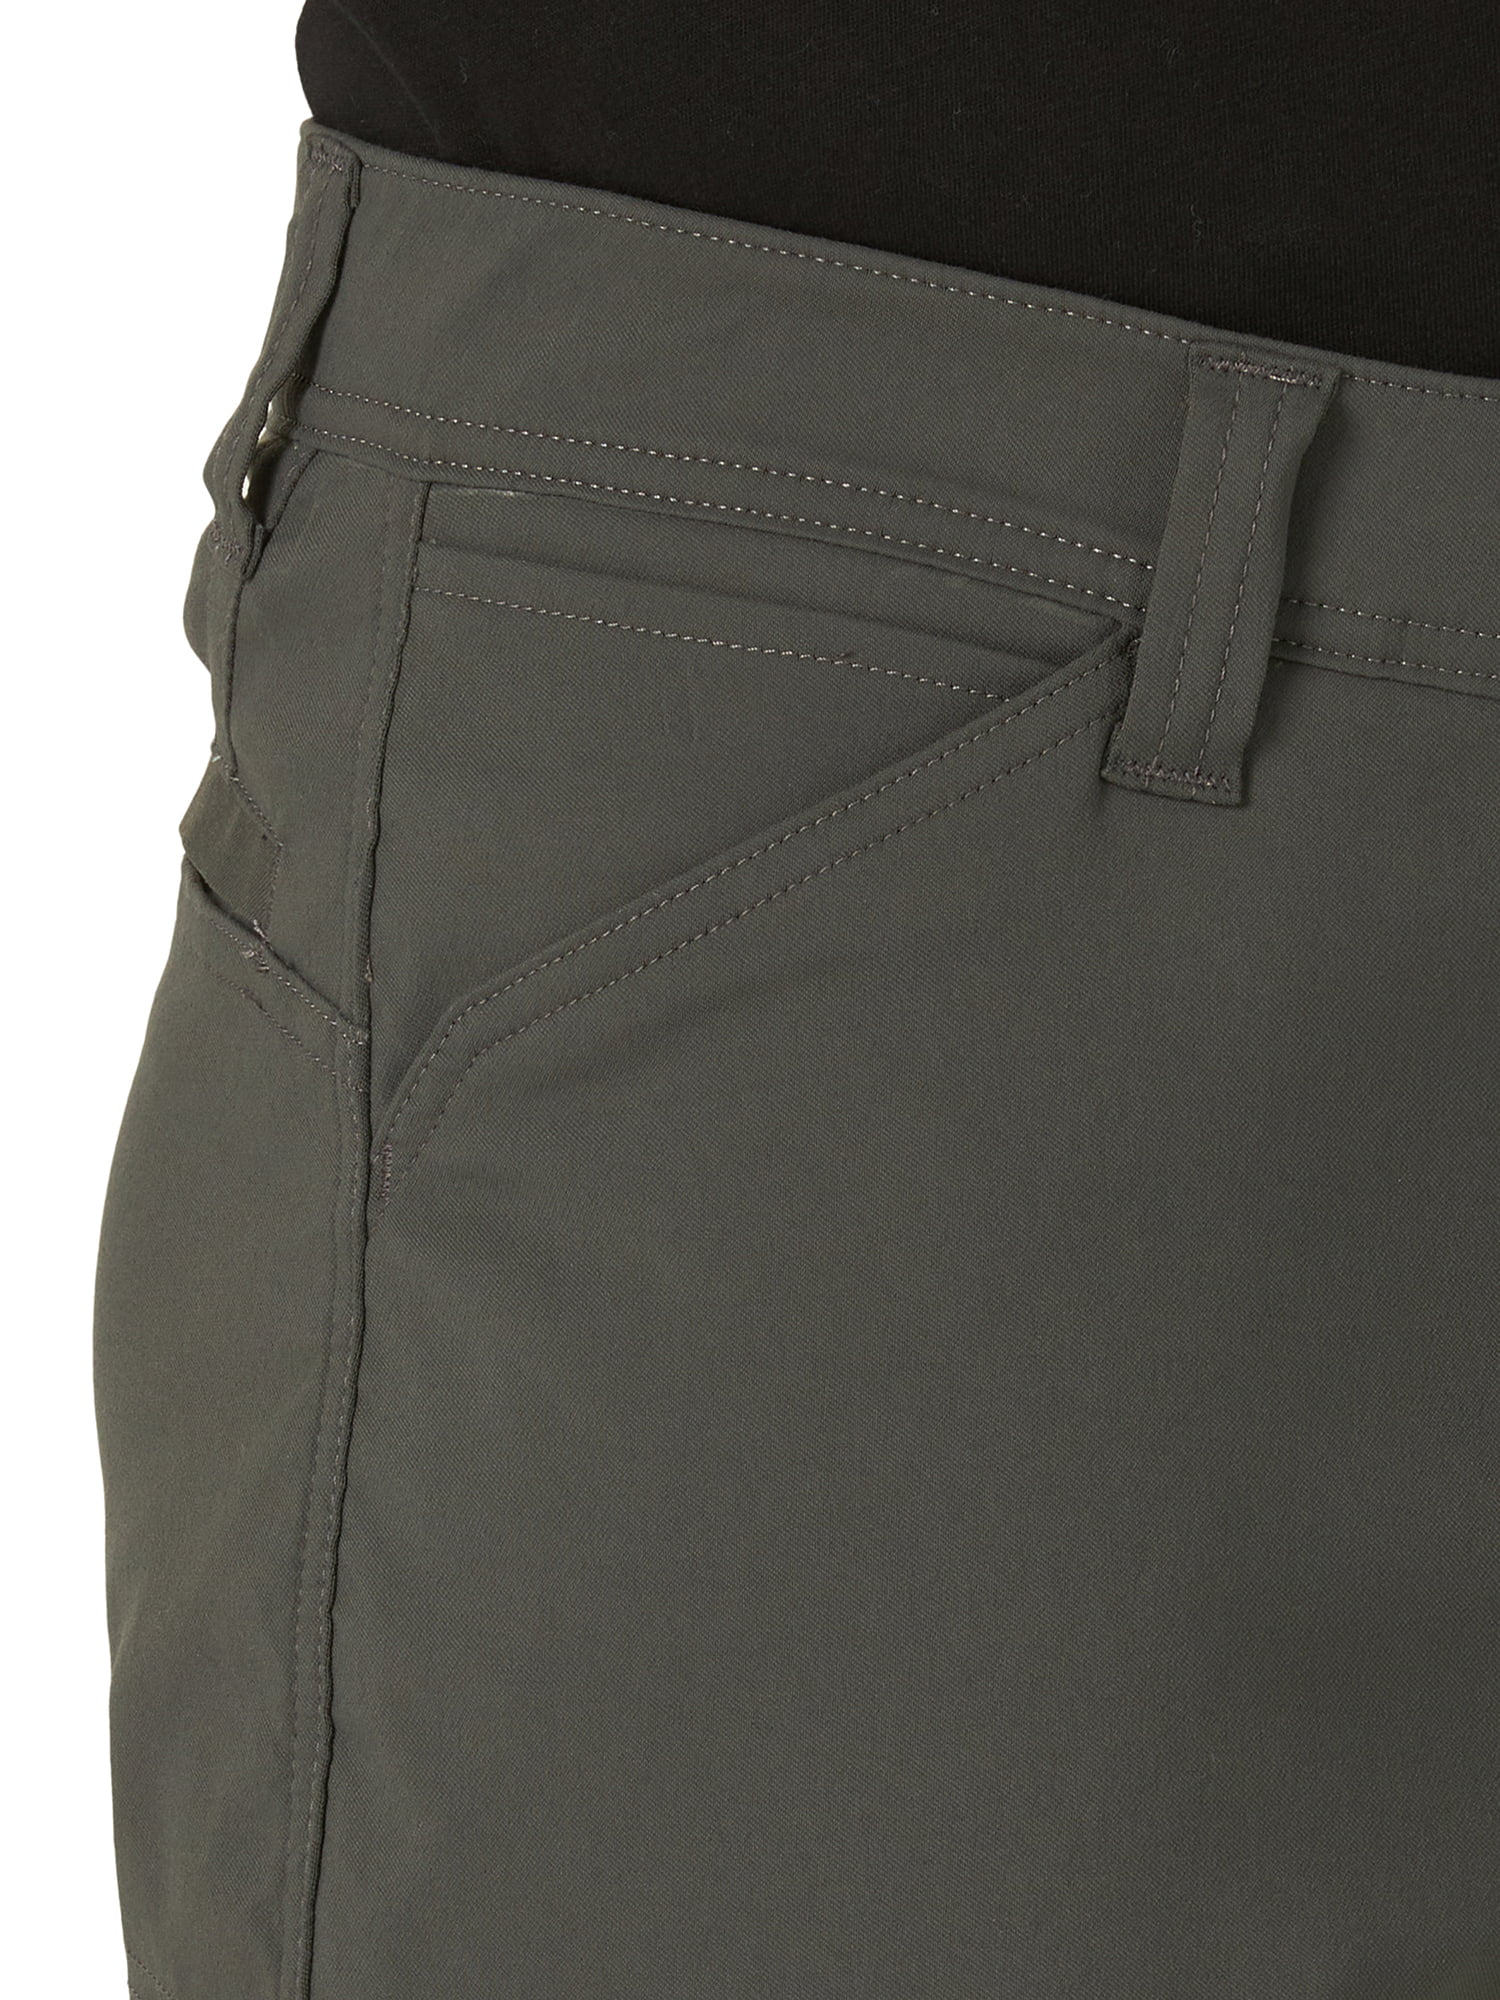 Wrangler Men's Flex Cargo Pants Relaxed Fit Elmwood Khaki w/Tech Pocket  (32x32) at Amazon Men's Clothing store